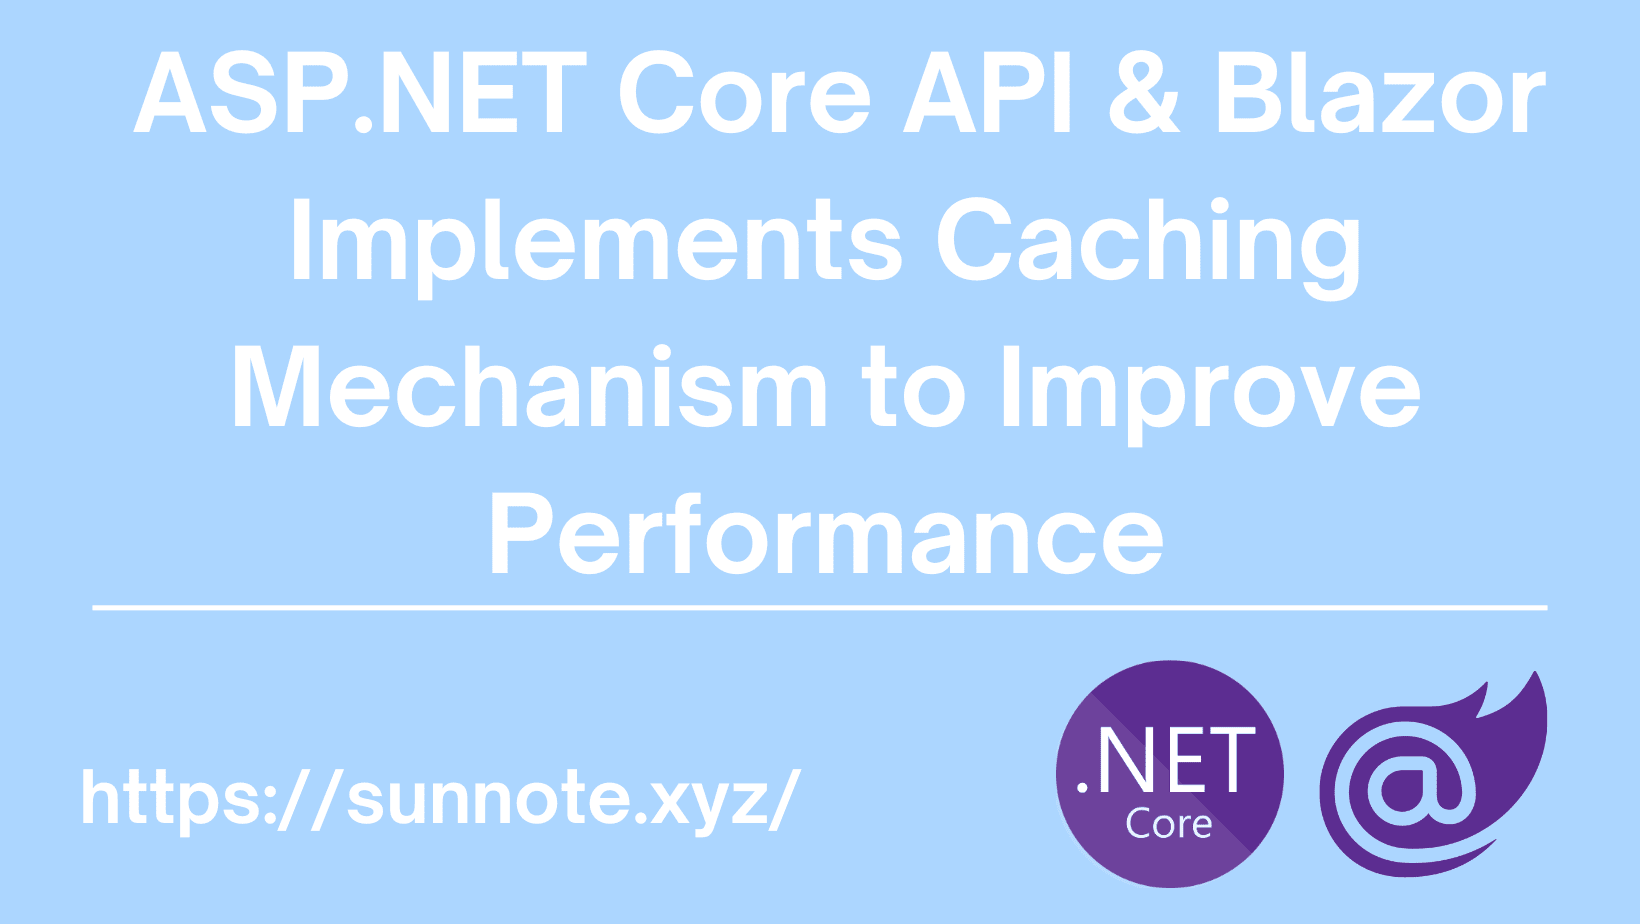 ASP.NET Core API & Blazor Implements Caching Mechanism to Improve Performance